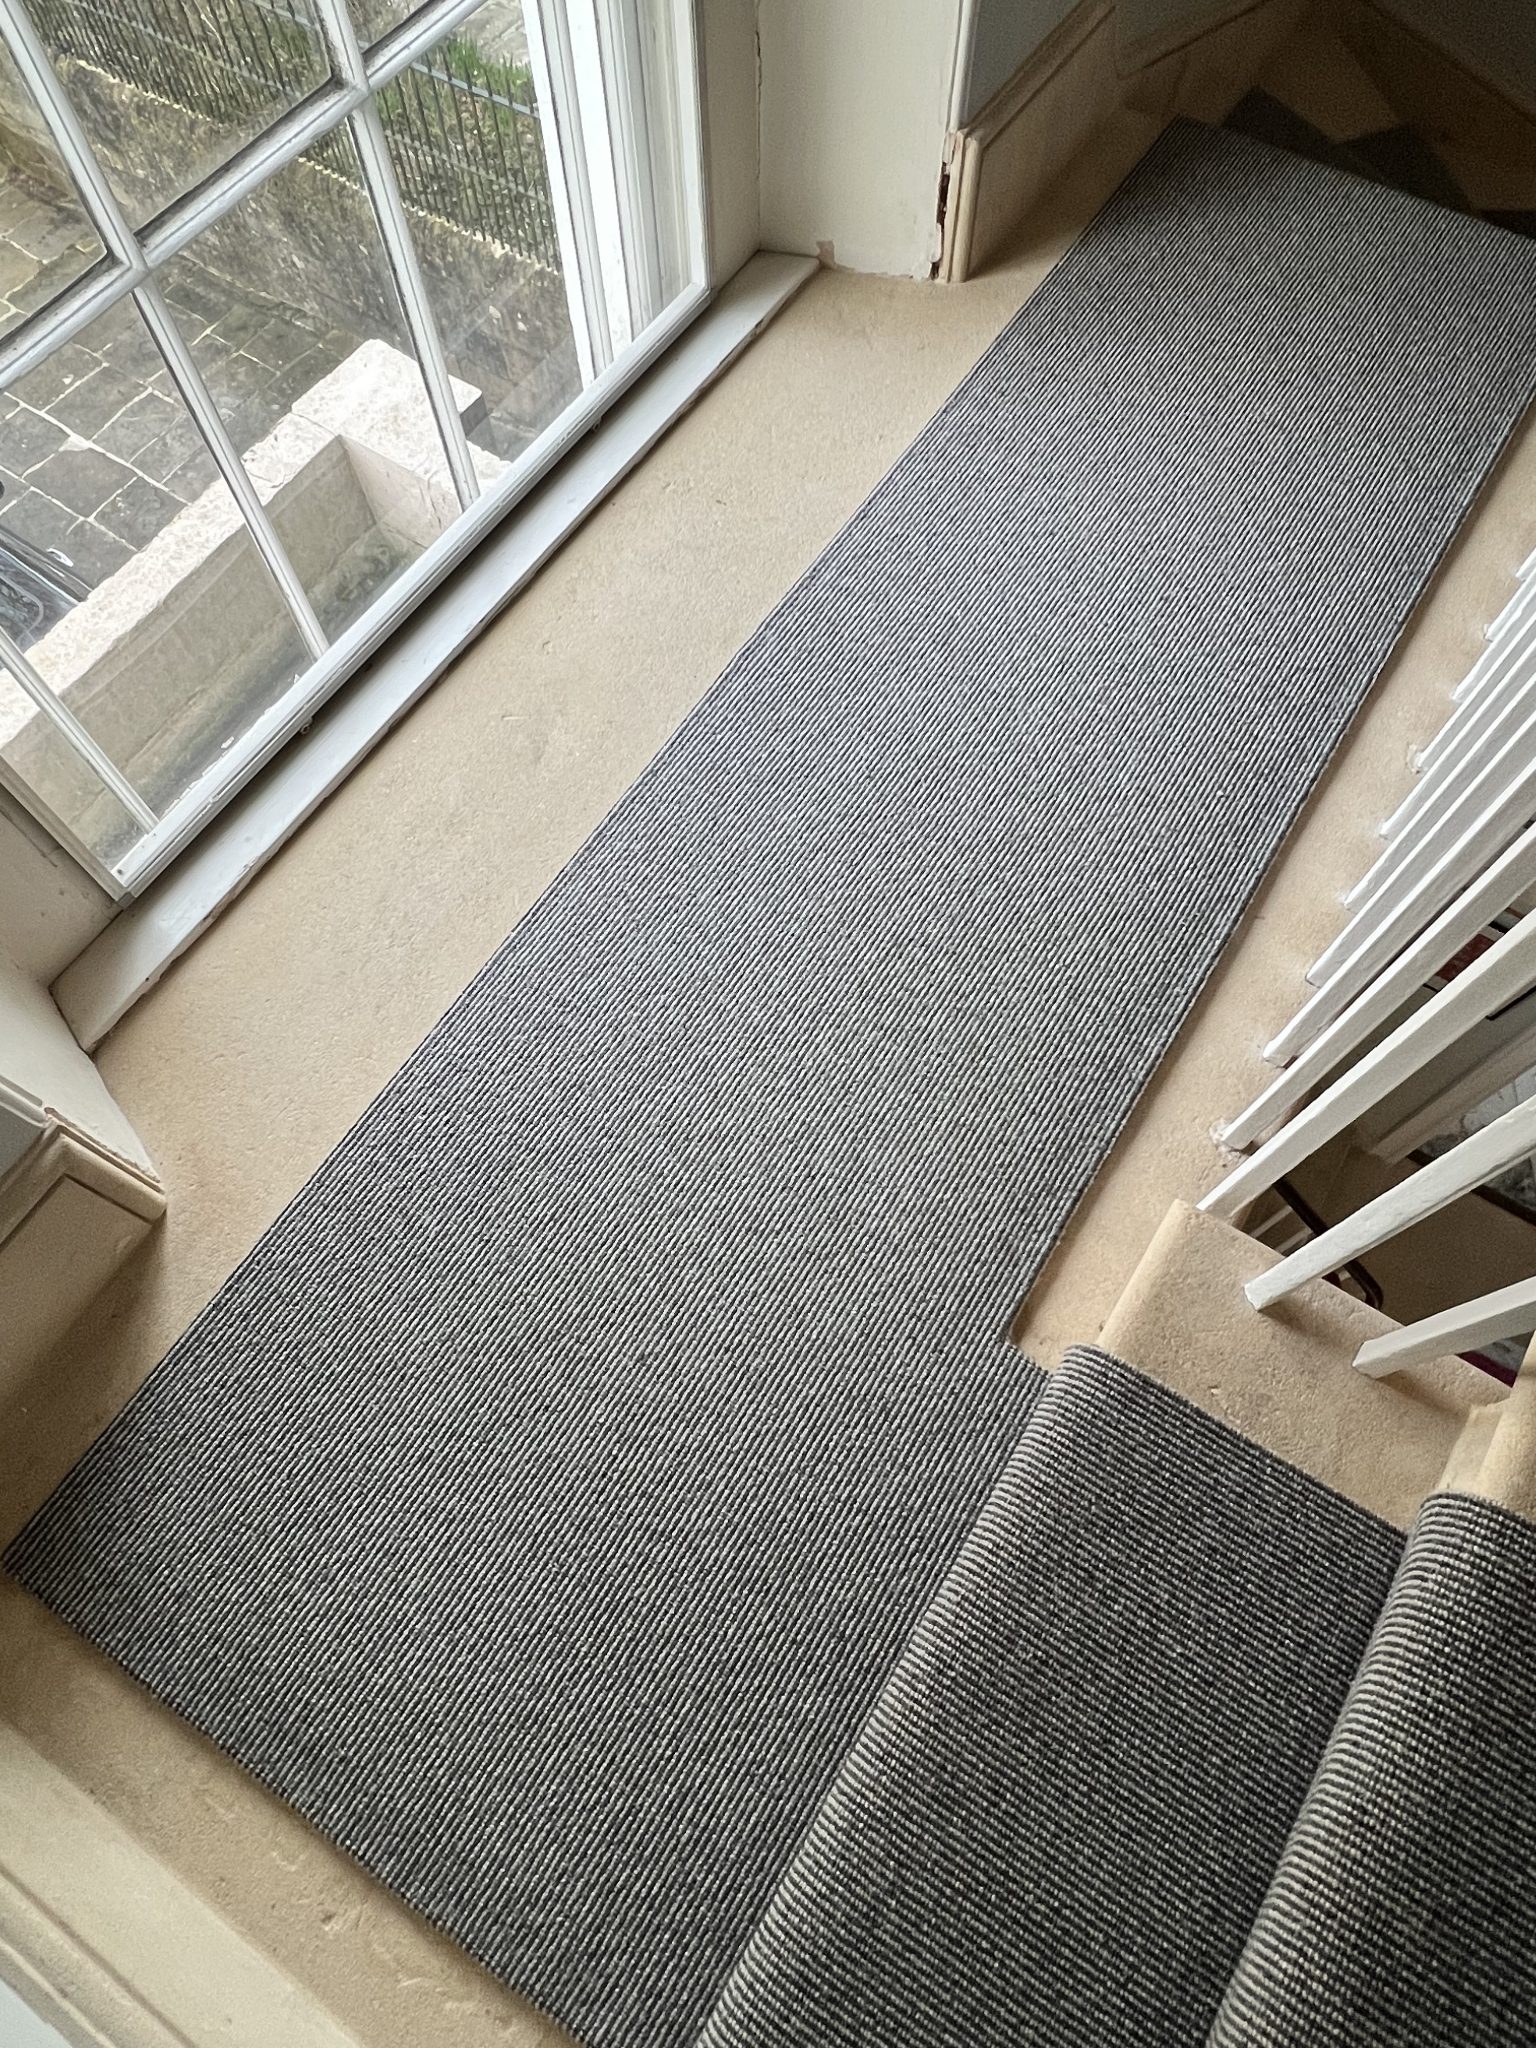 Avonvale Carpets - Bathwick Hill - Bath - Stairs - Landing - Carpet - Runner - Telenzo Carpets - Mainline - 5